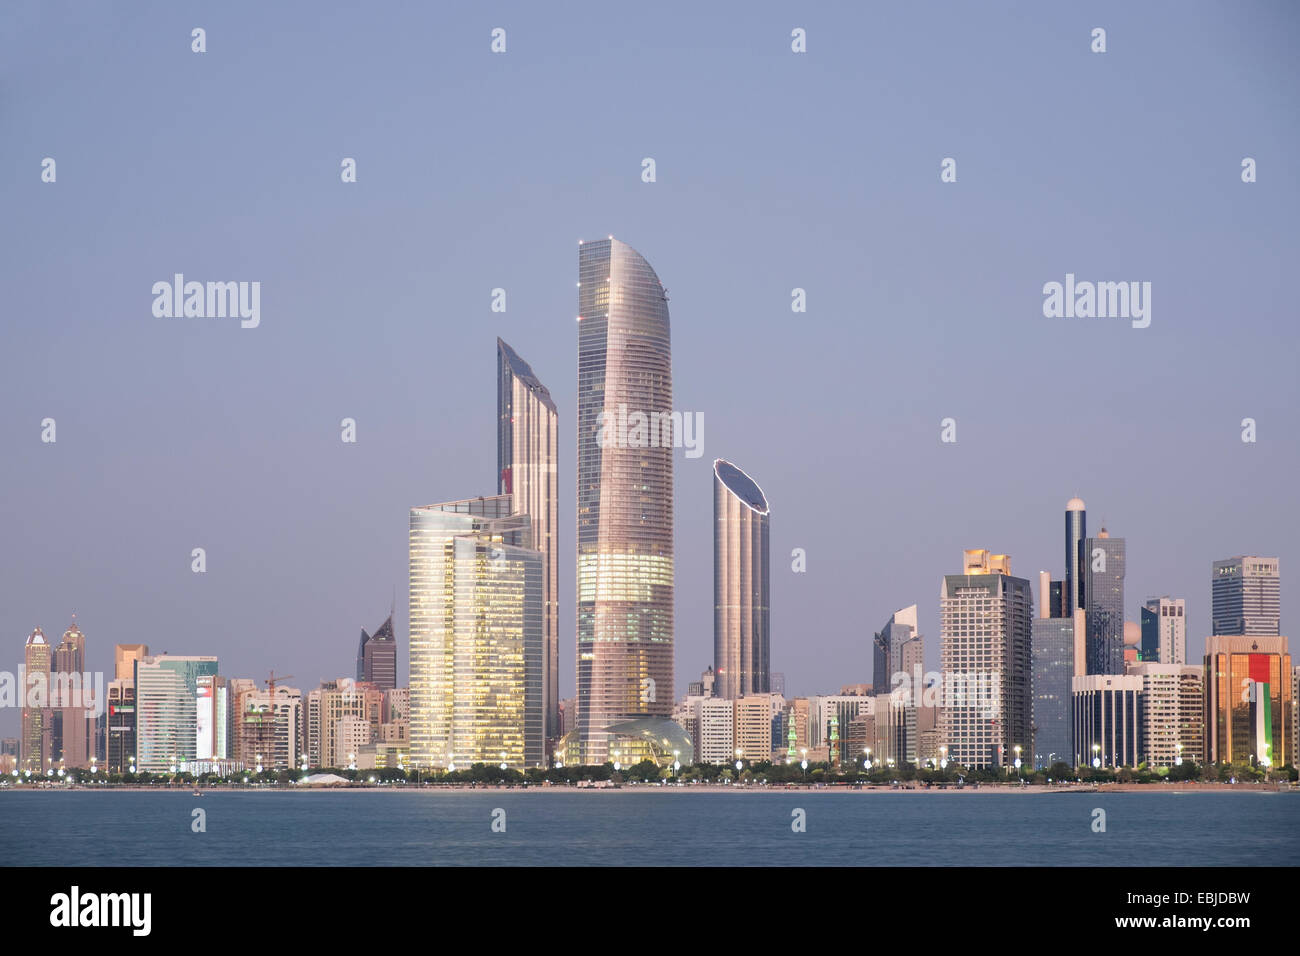 Skyline of modern buildings along Corniche waterfront in Abu Dhabi United Arab Emirates Stock Photo